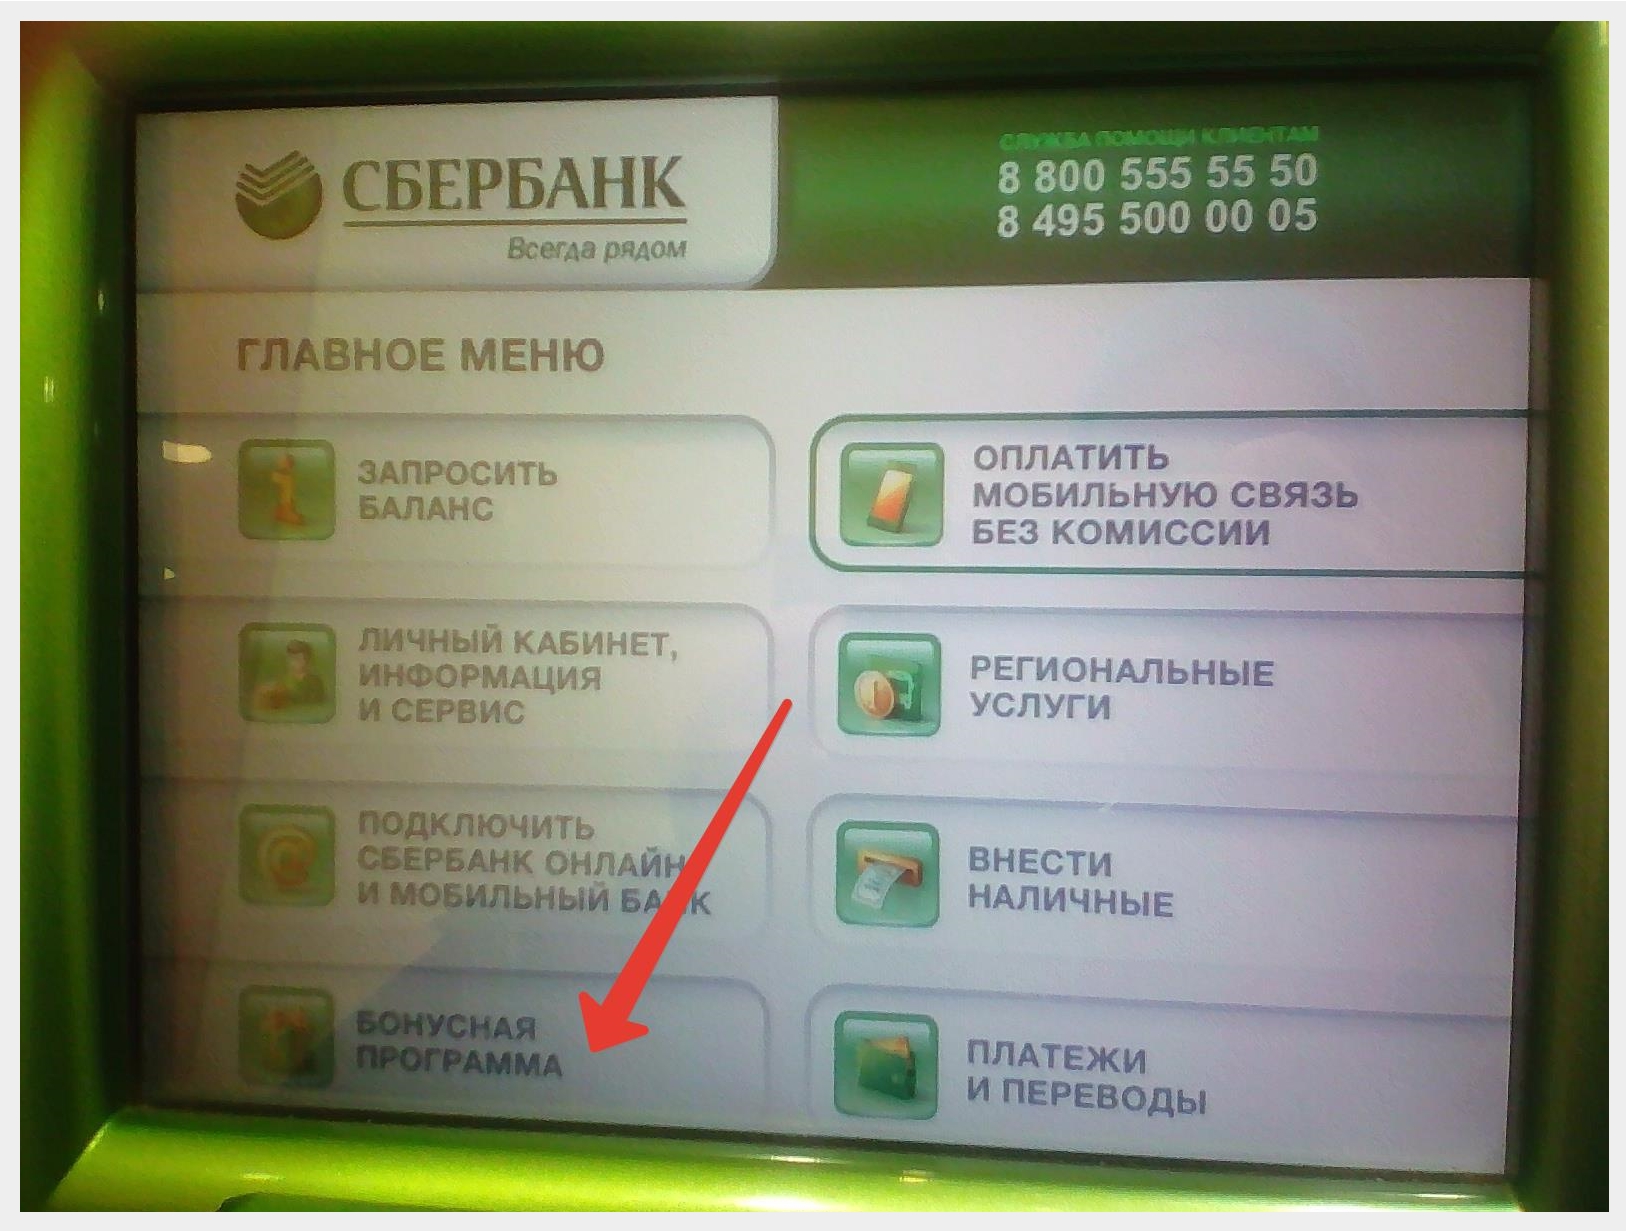 Как перевести спасибо от Сбербанка в рубли